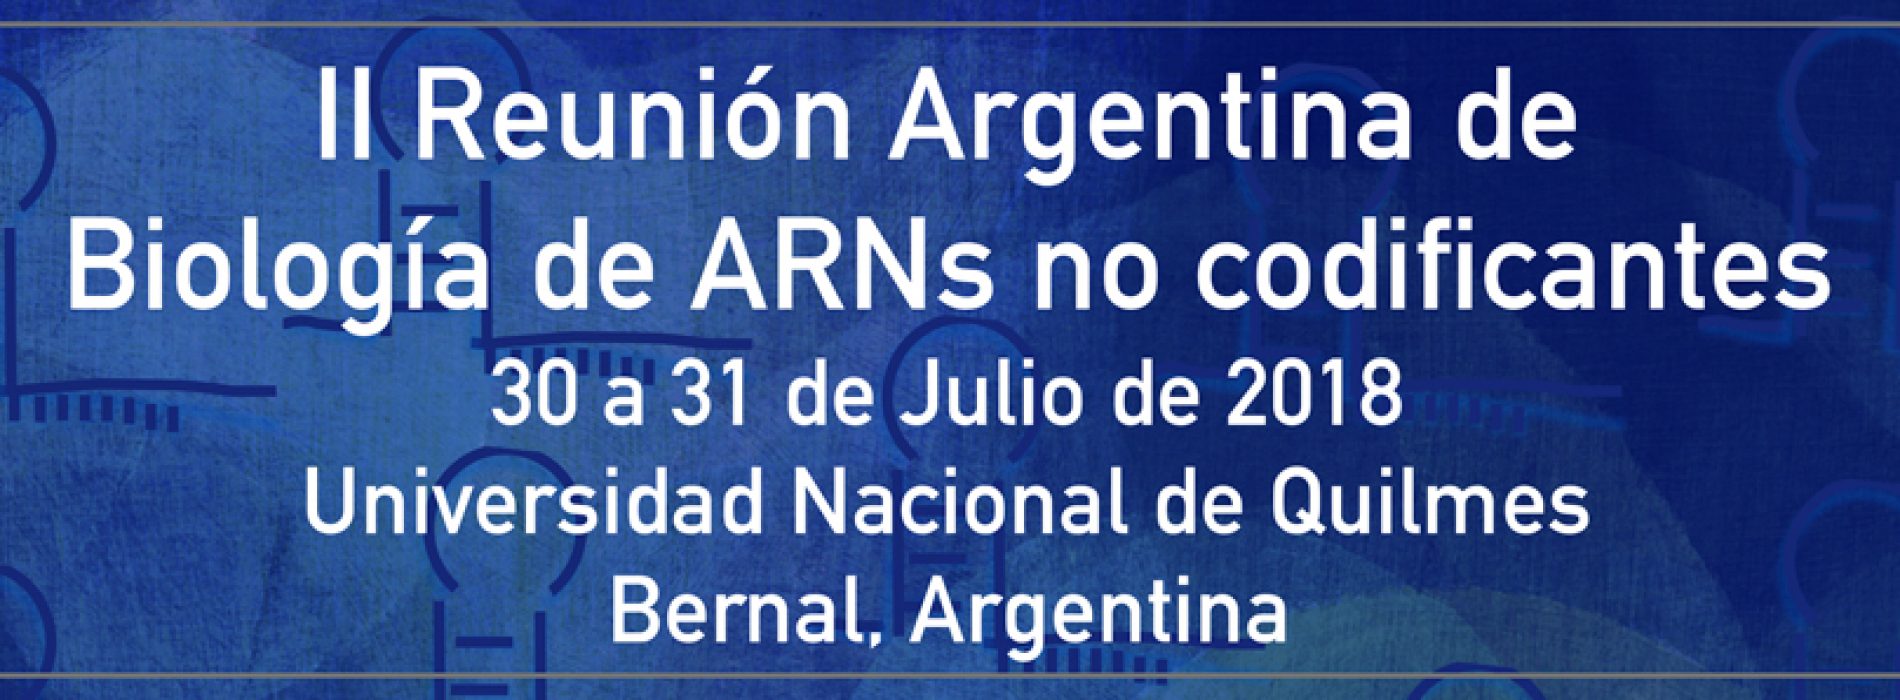 Non-coding RNAs biology Argentina meeting - 2018